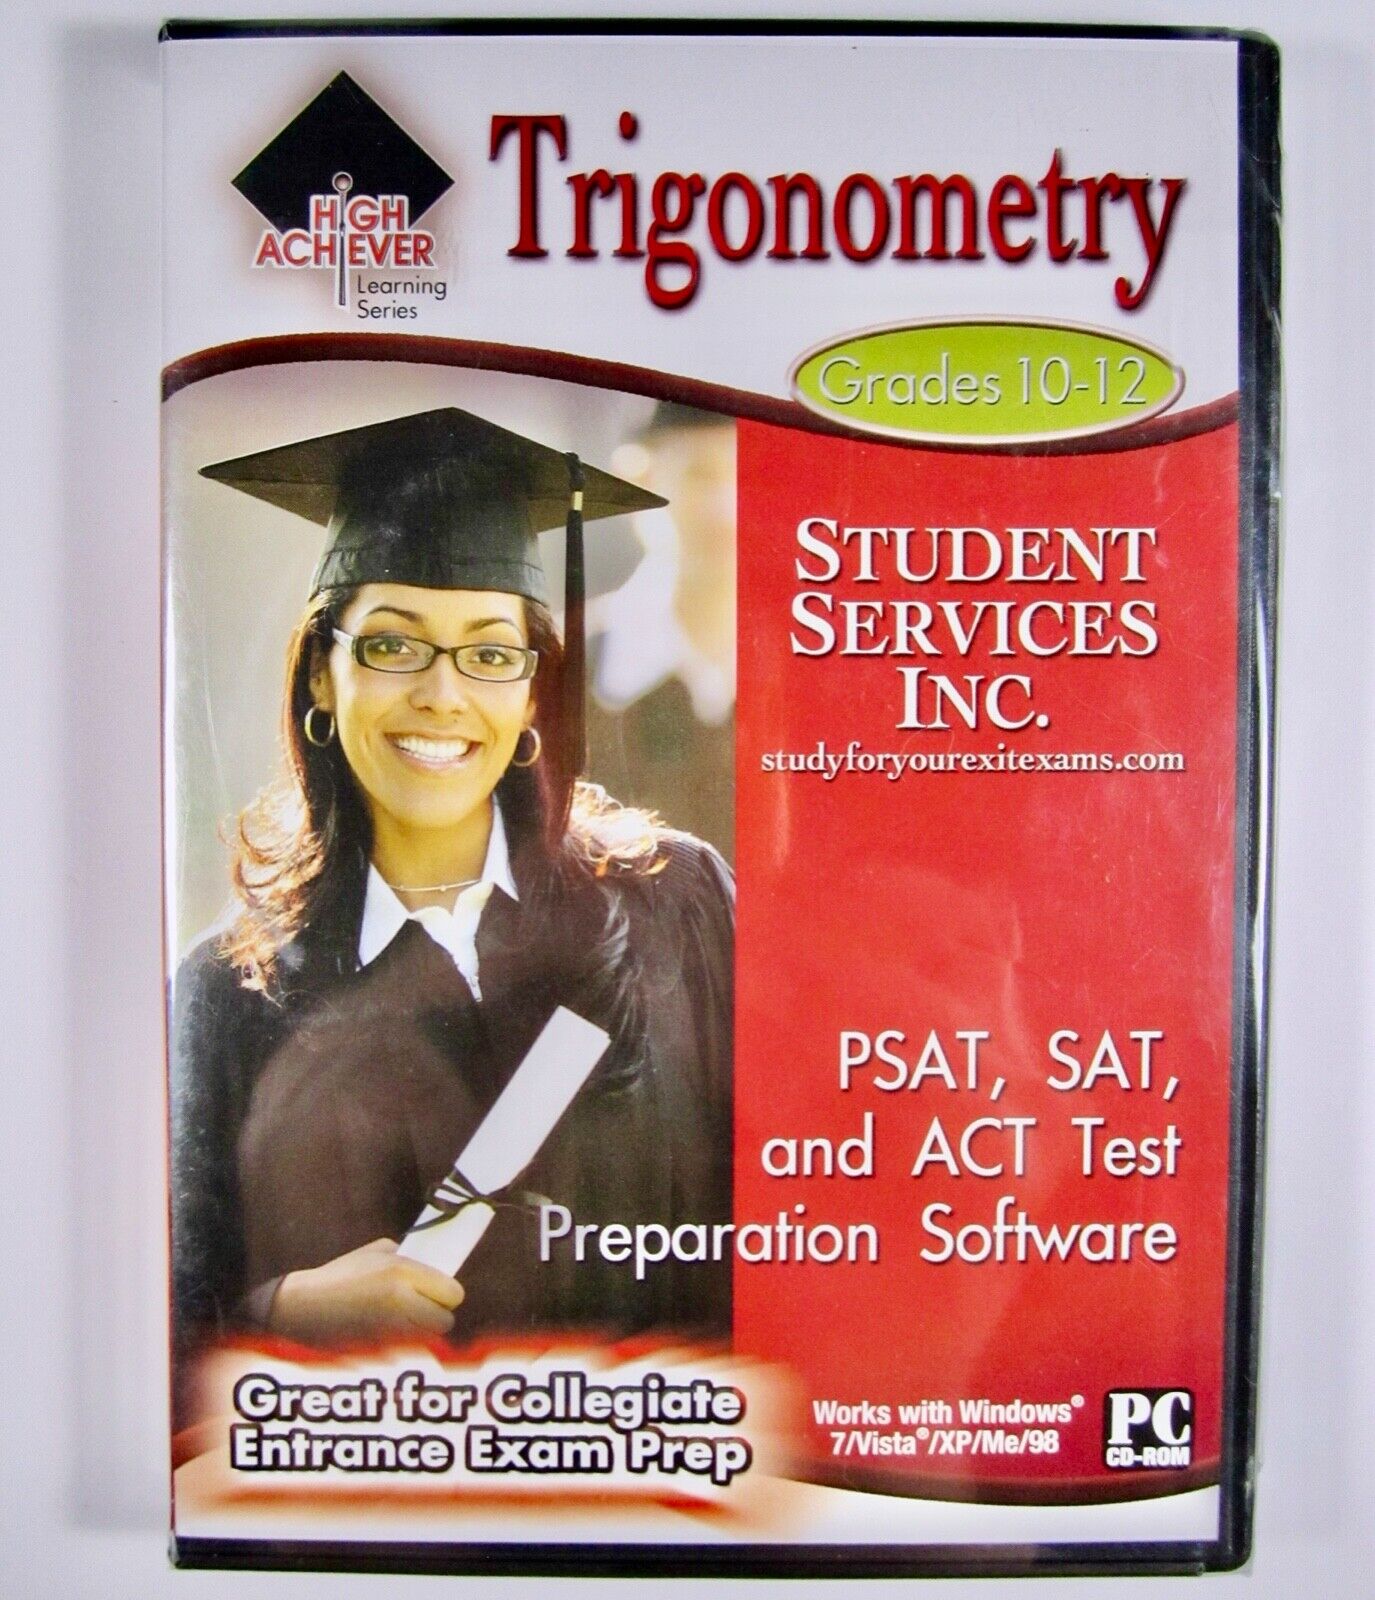 SEALED Trigonometry Grades 10-12 PSAT SAT ACT Test Preparation Software